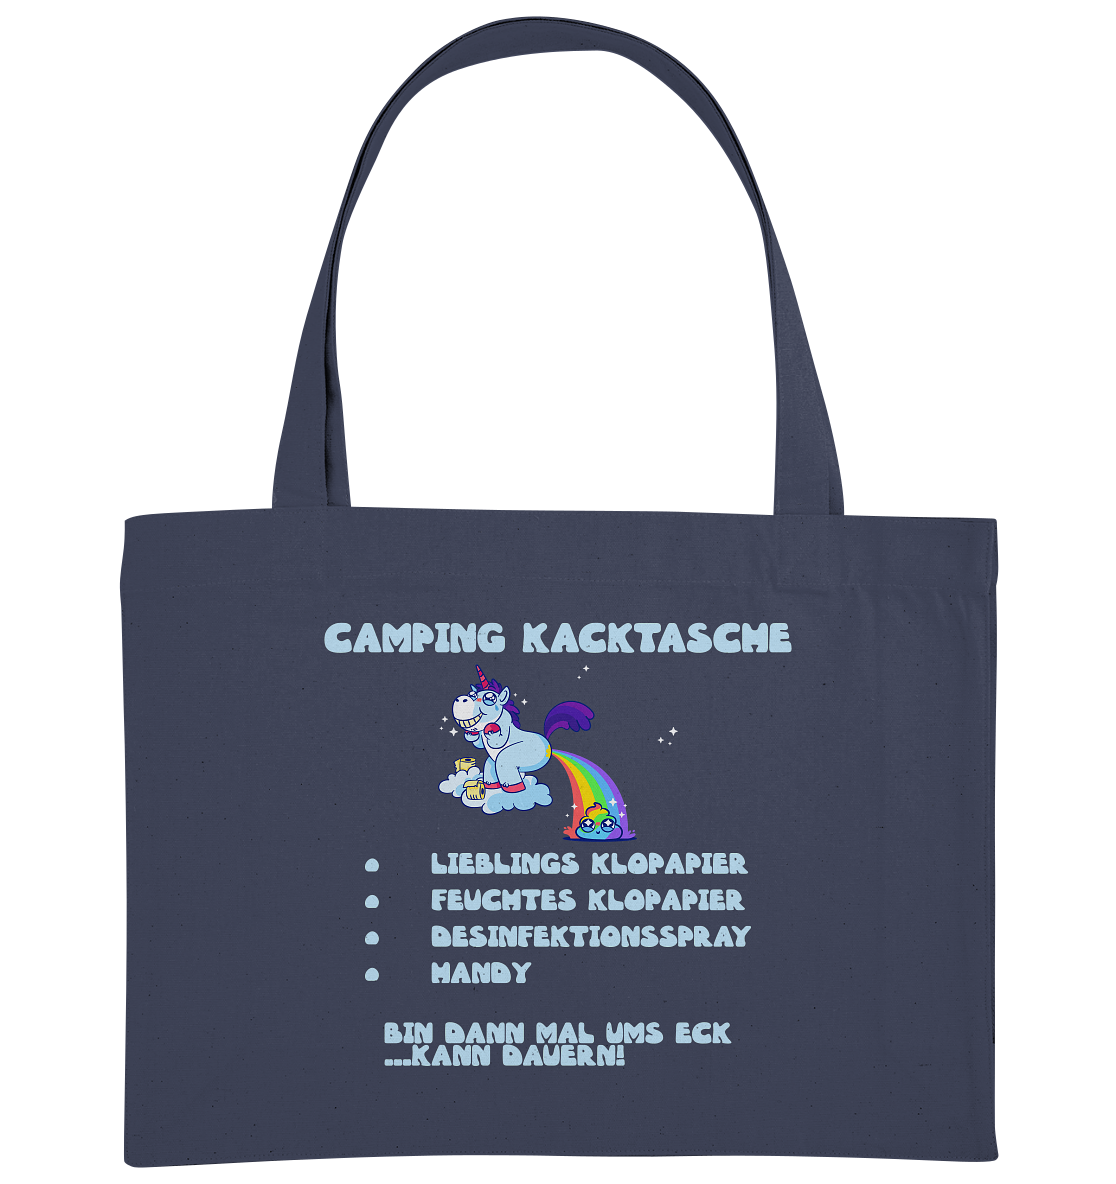 Camping Kacktasche - Organic Shopping-Bag